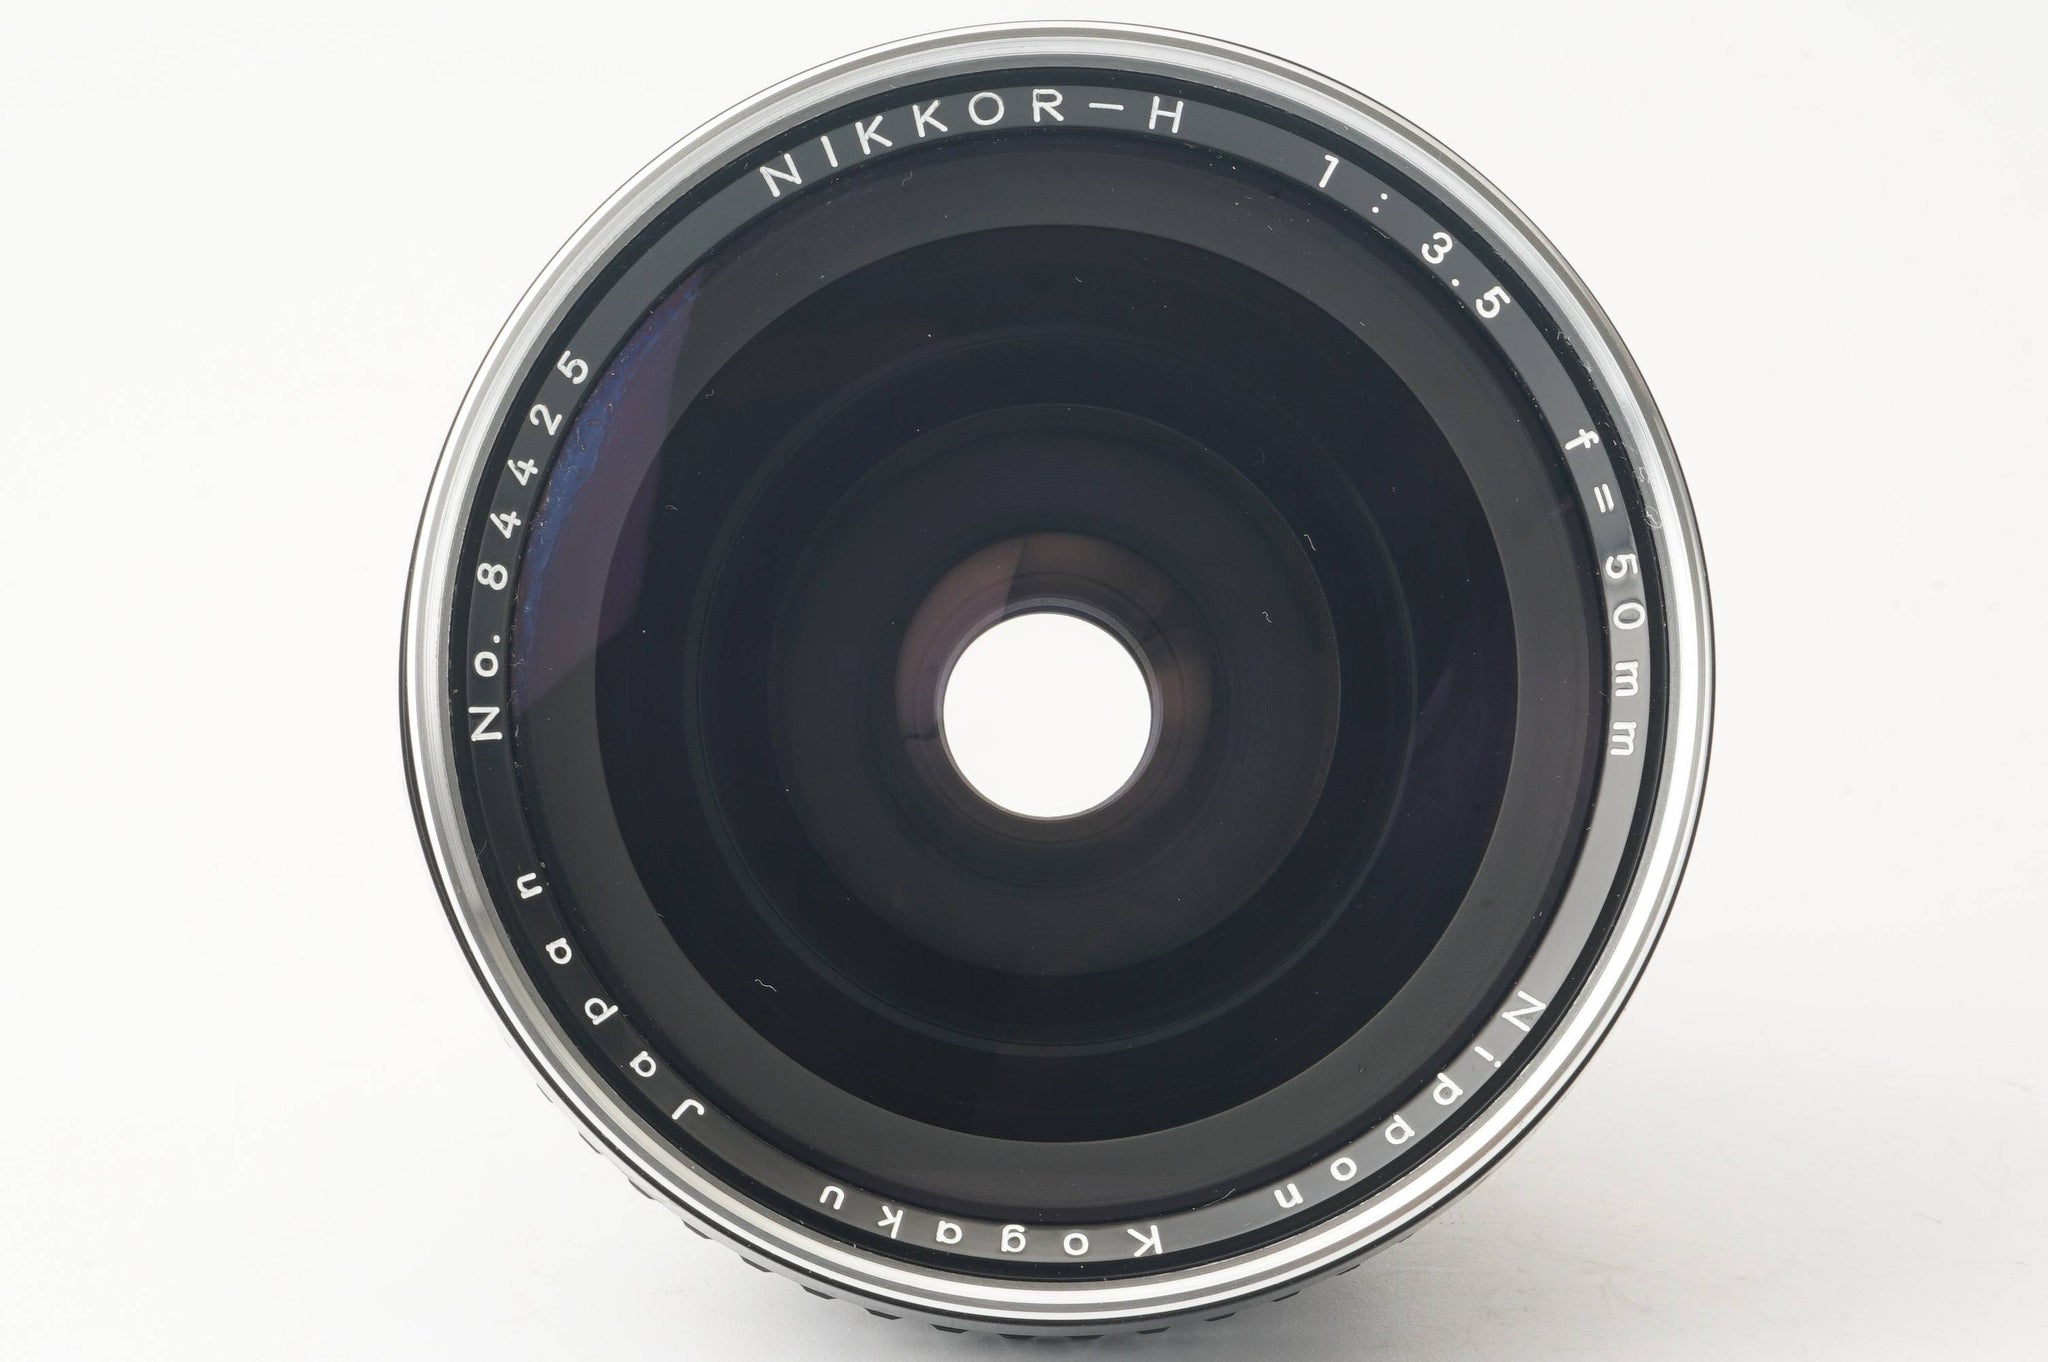 Nikon ニコン NIKKOR-H 50mm F3.5 ゼンザブロニカ用-